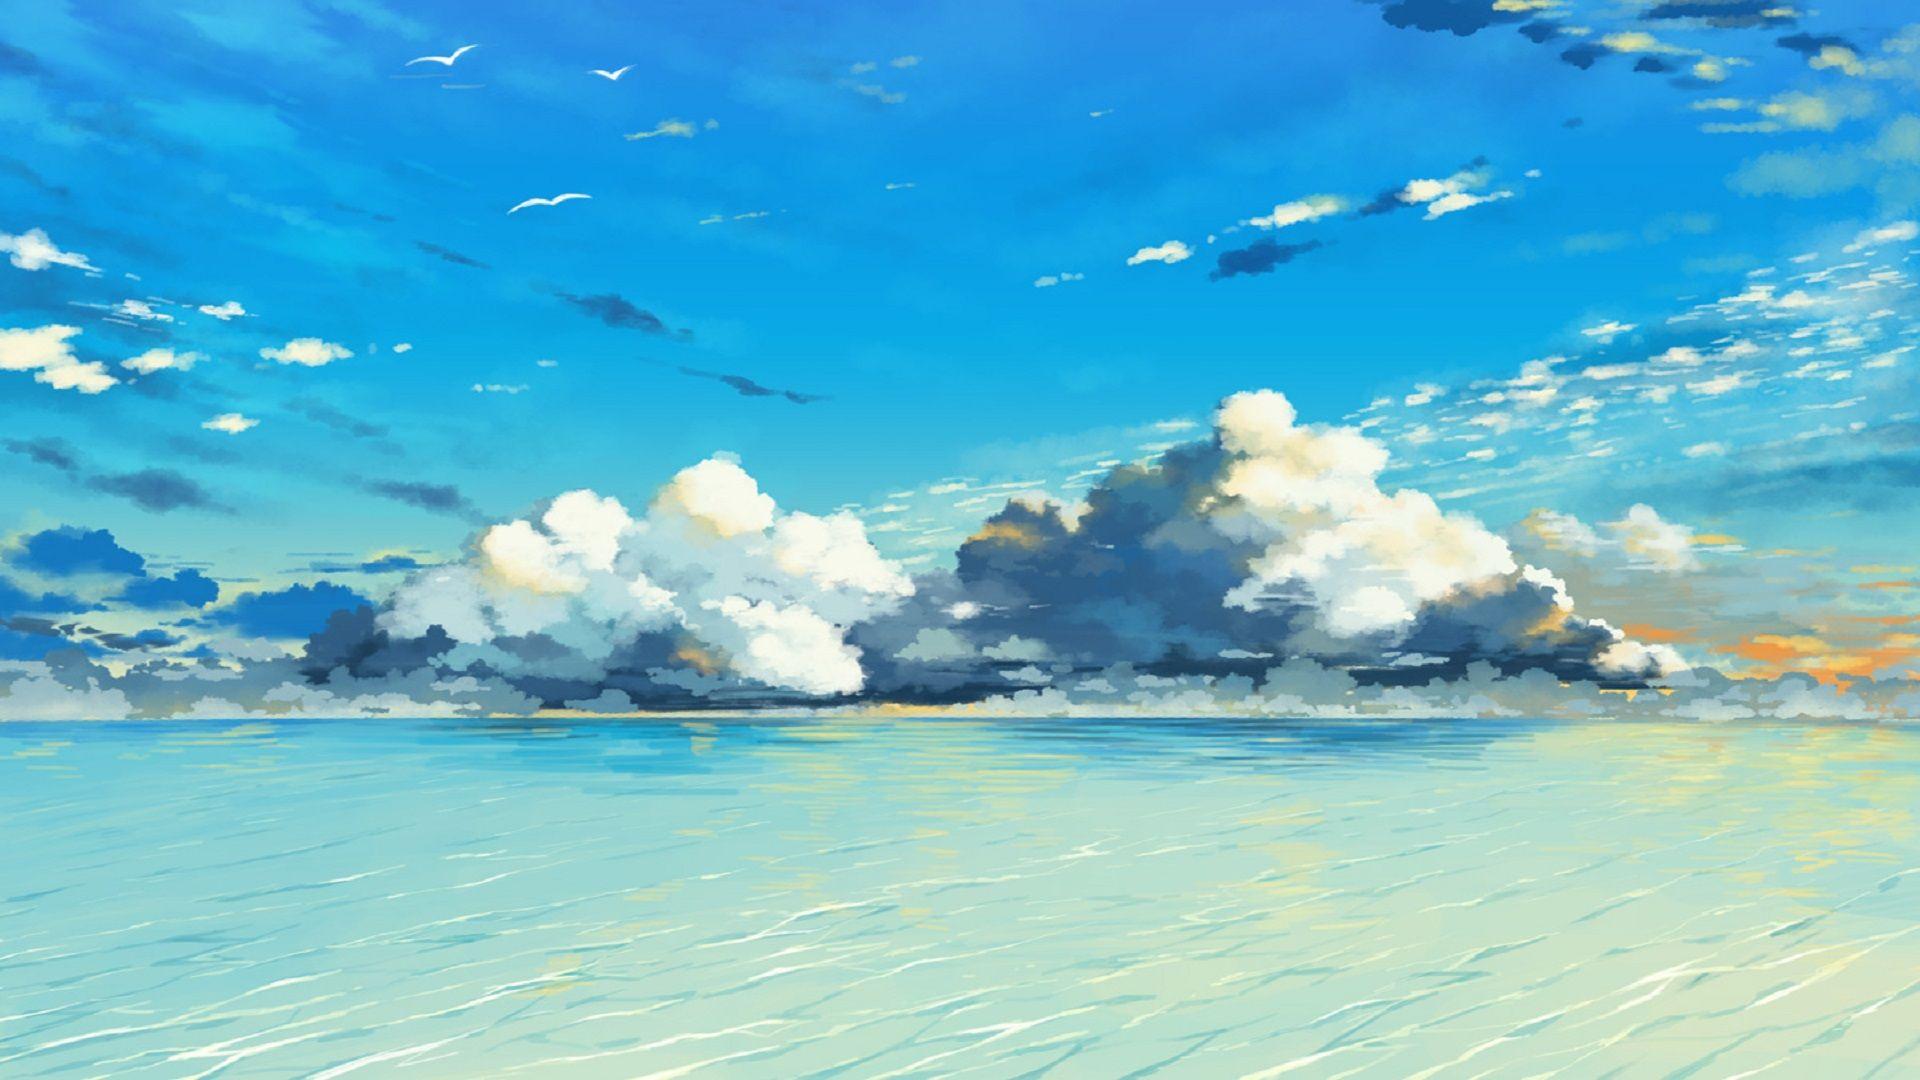 Anime Ocean Wallpapers - Top Free Anime Ocean Backgrounds ...